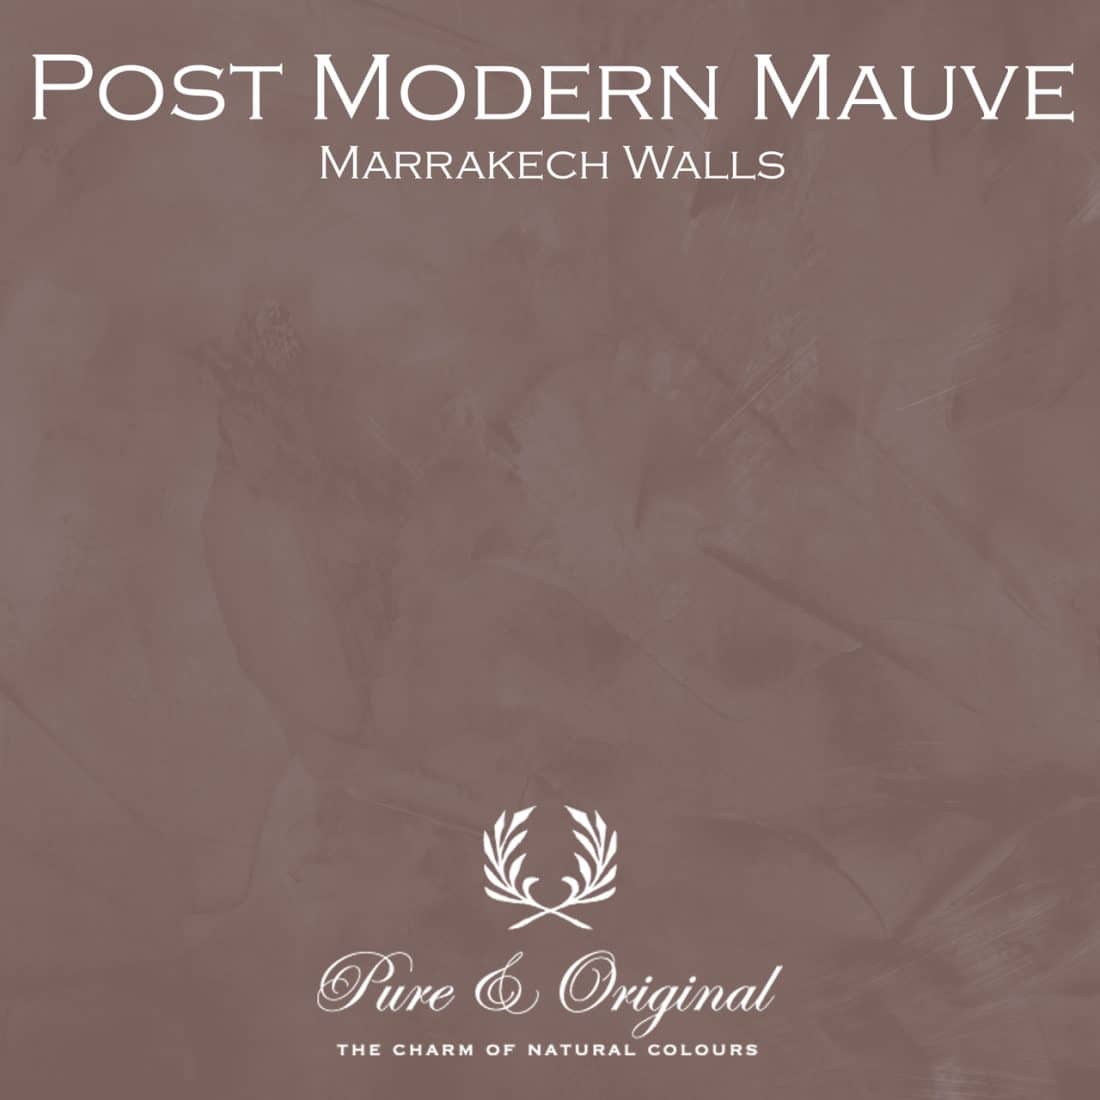 Post Modern Mauve Marrakech Walls Pure Original